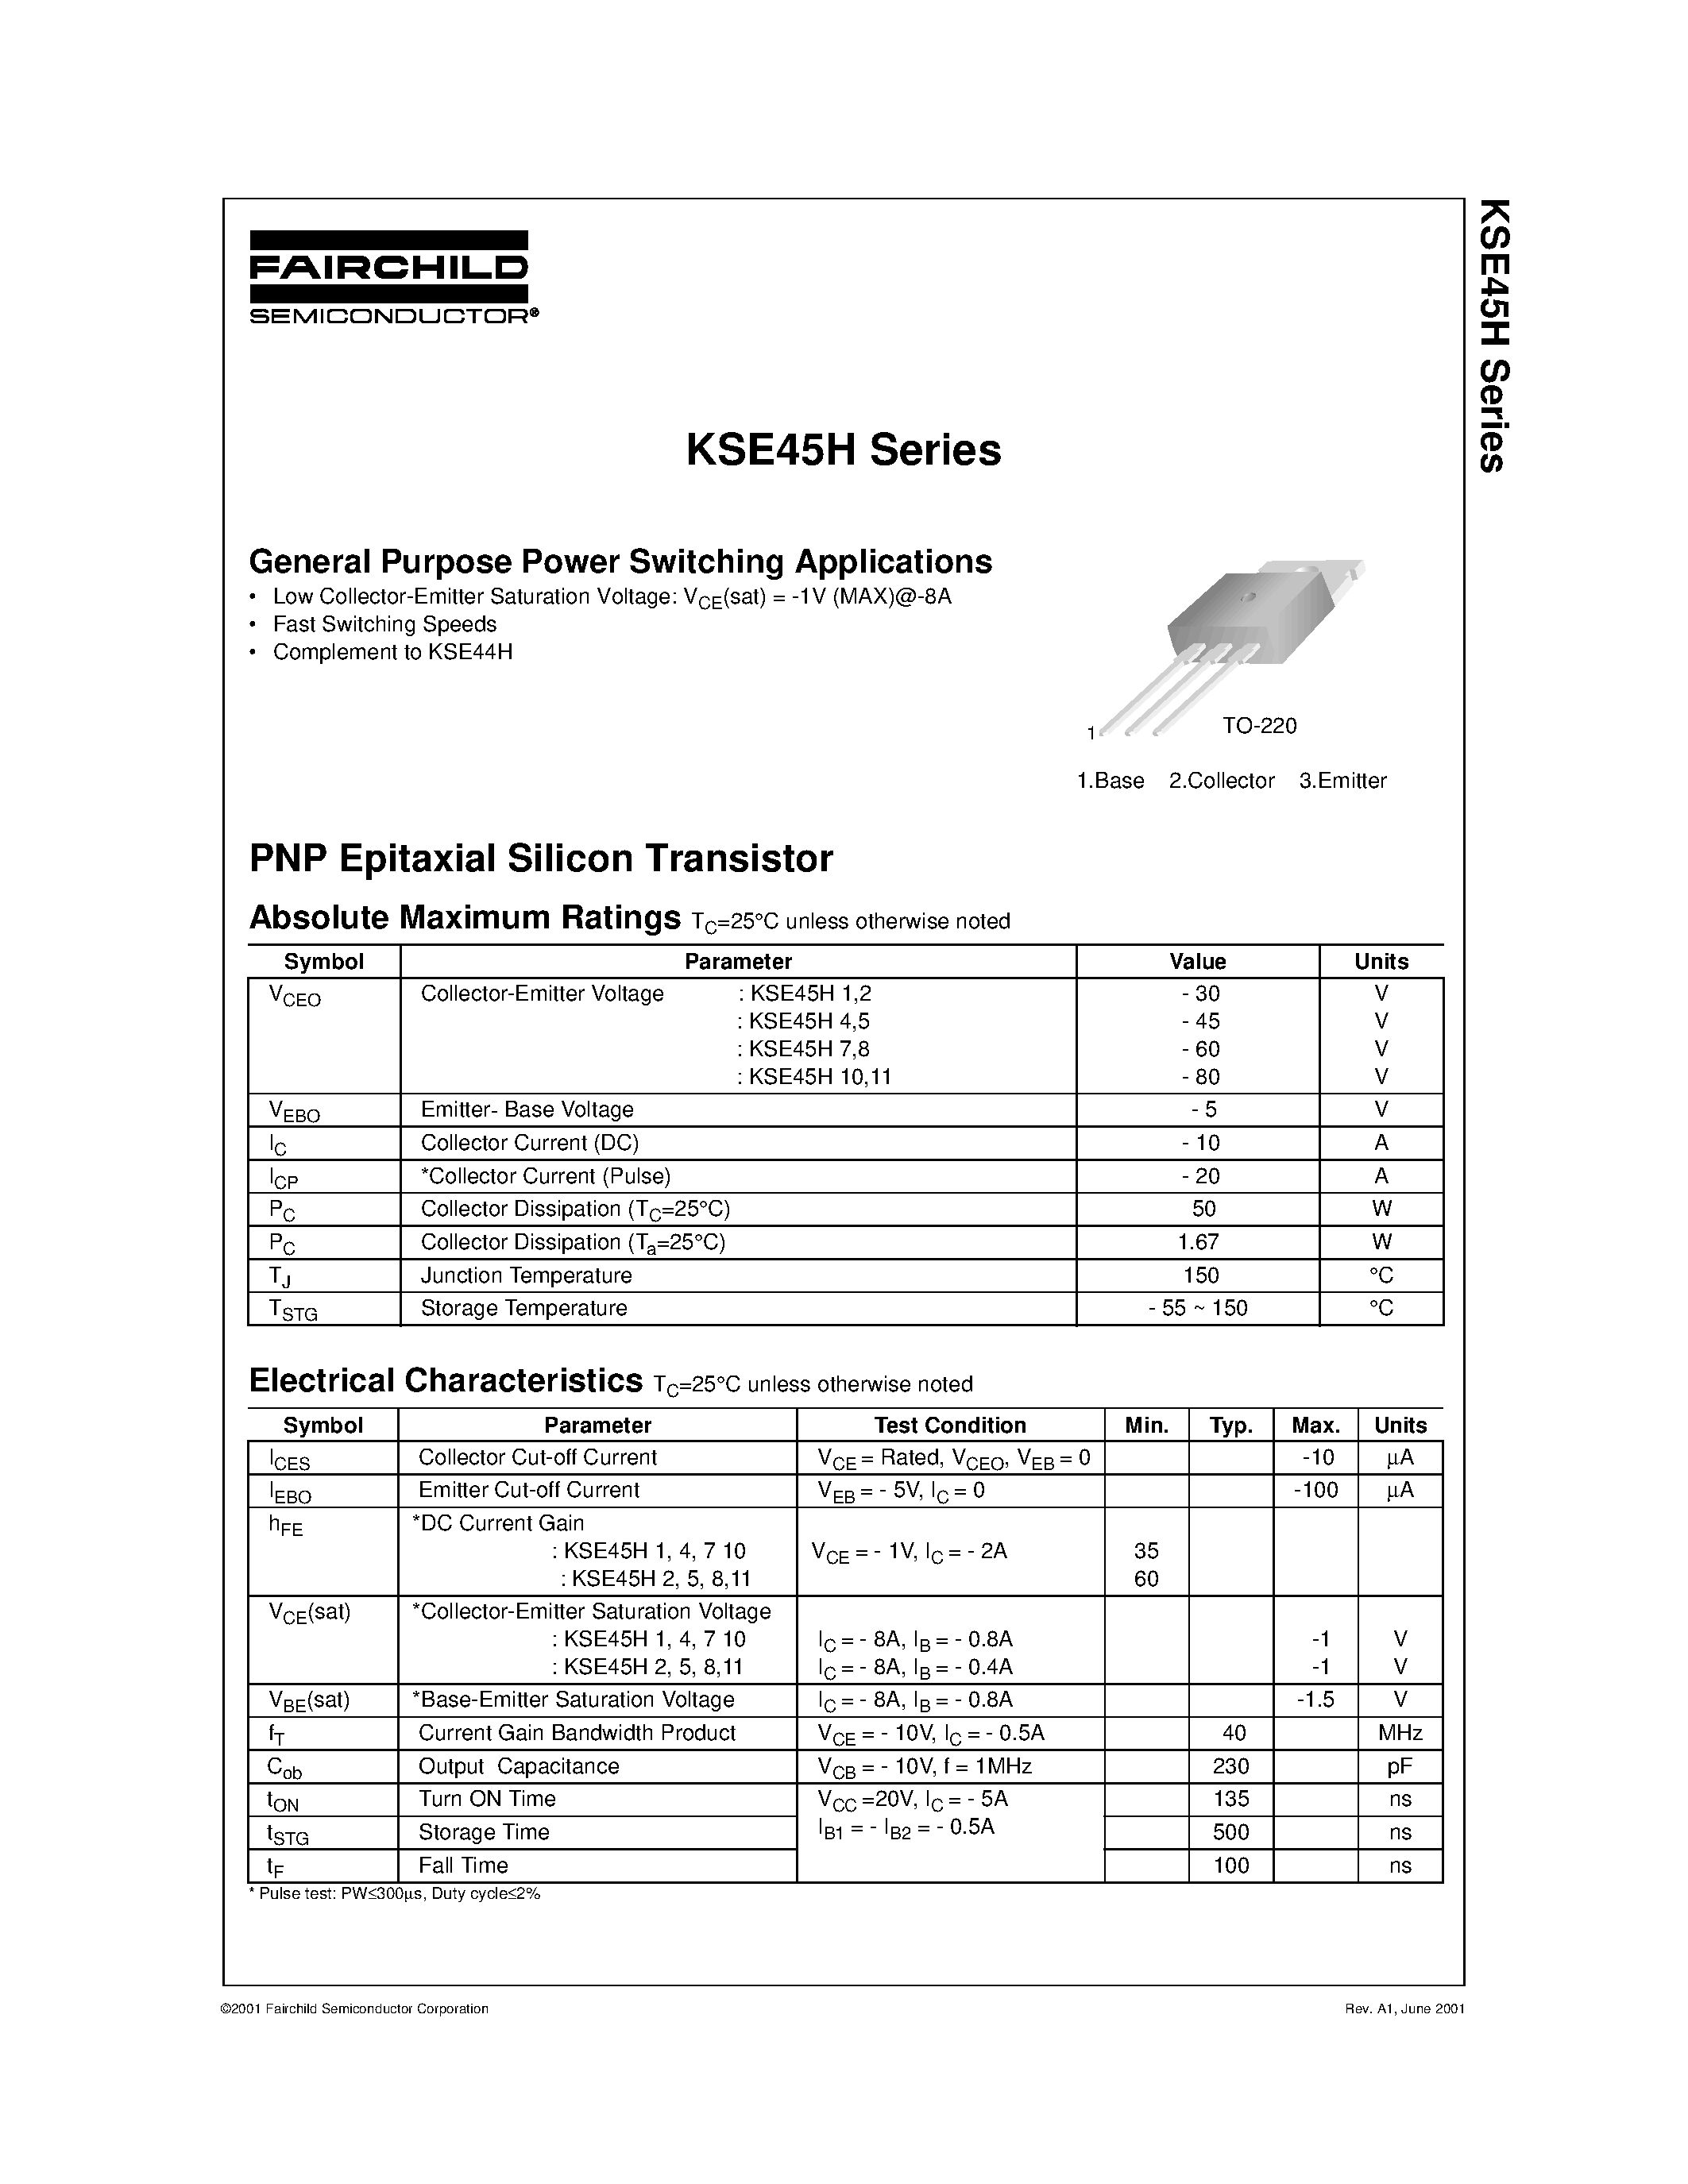 Datasheet KSE45H1 - General Purpose Power Switching Applications page 1